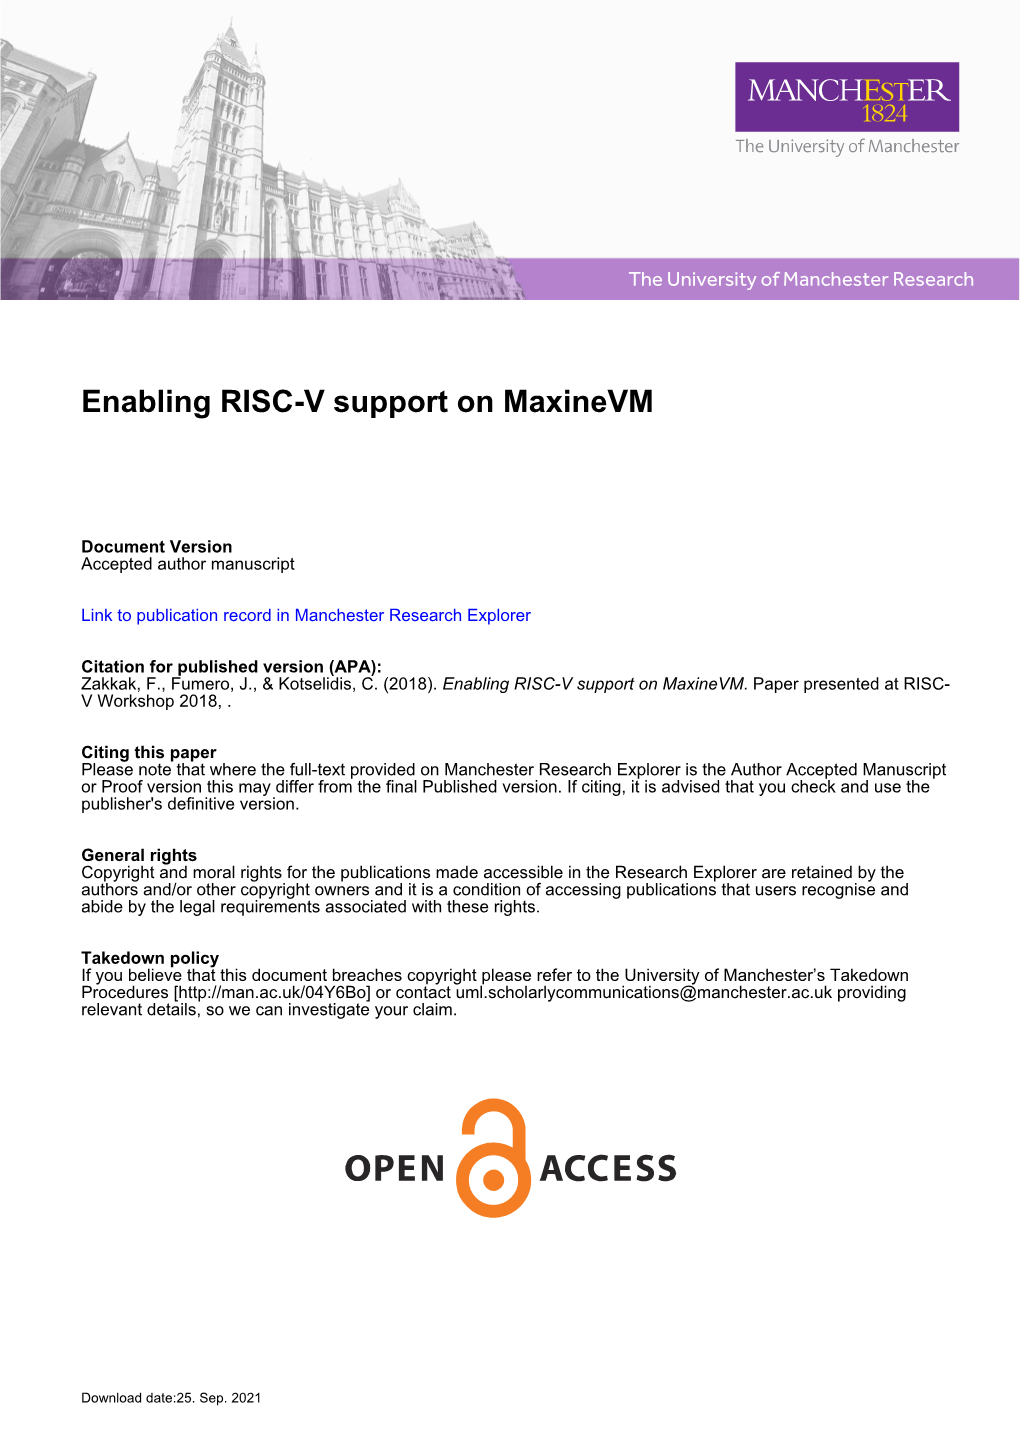 Enabling RISC-V Support on Maxinevm